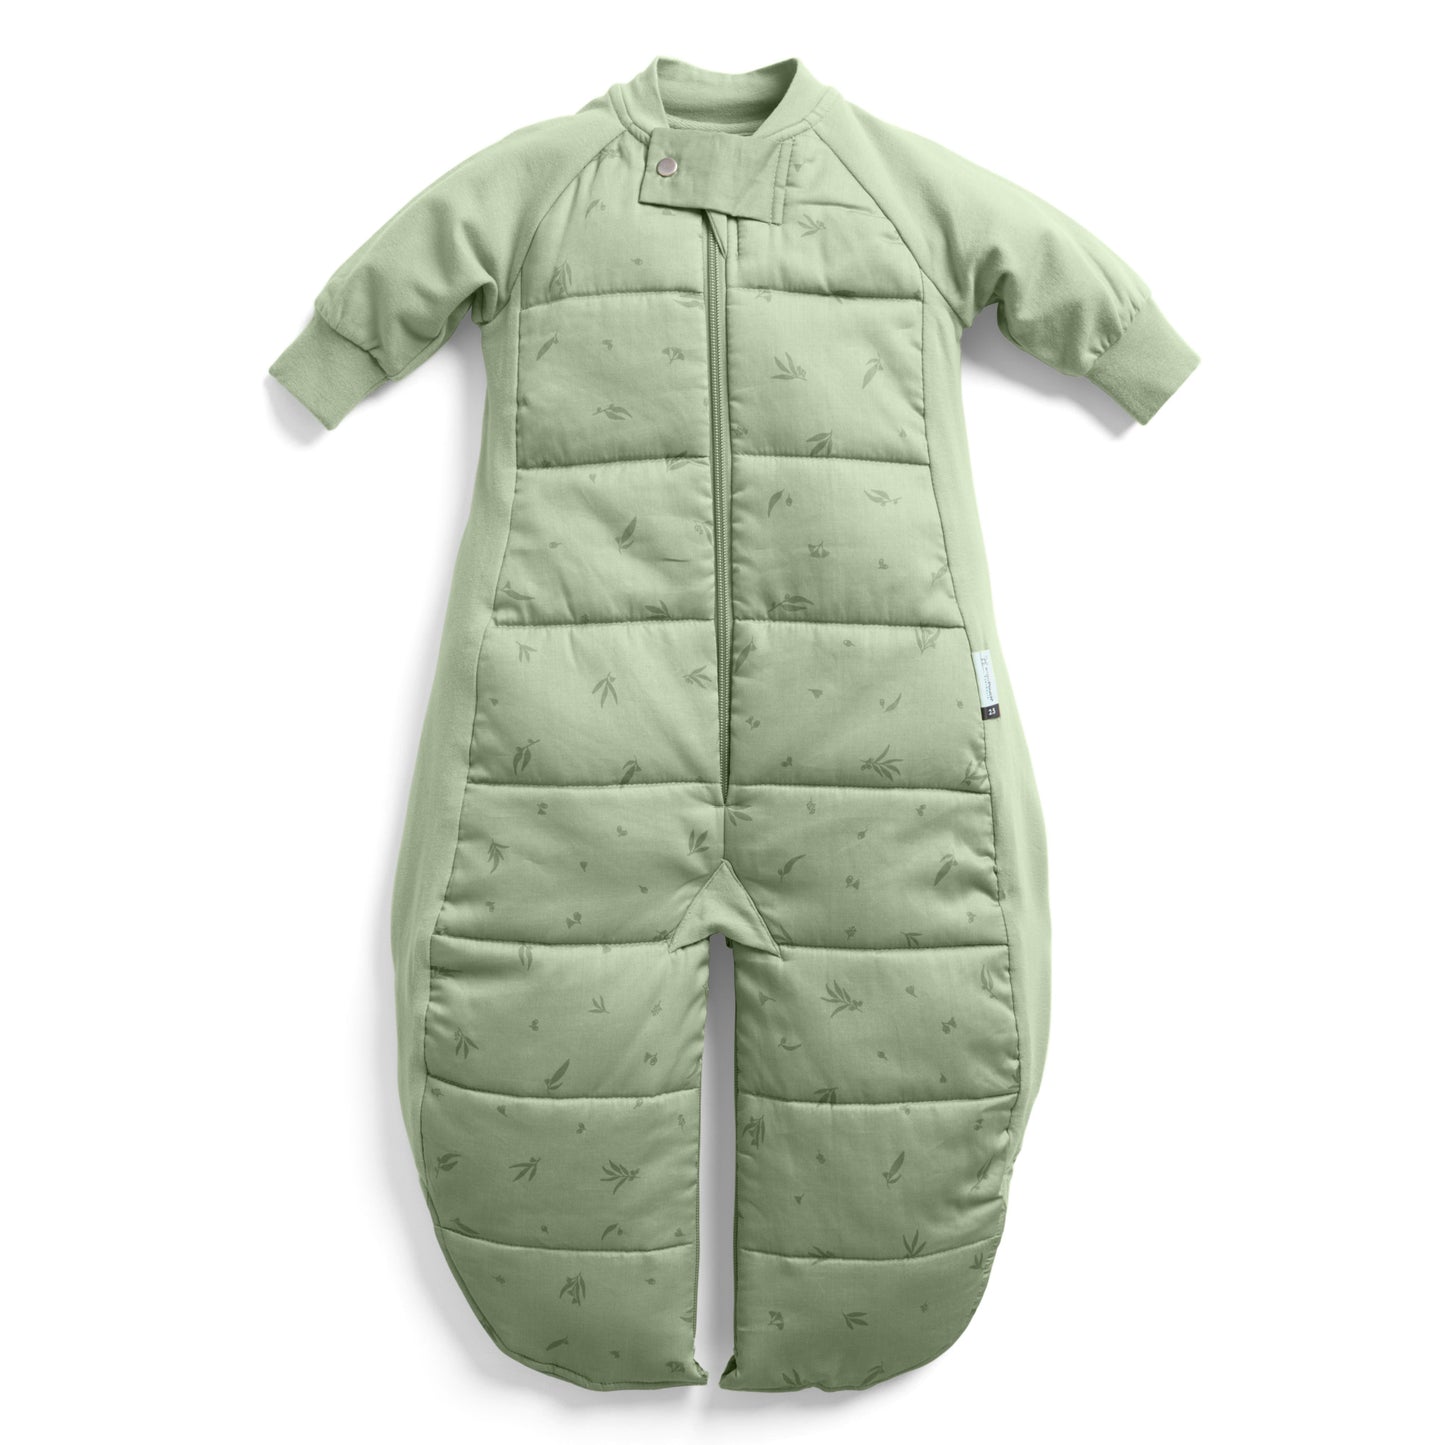 Sleep Suit Bag, 2.5 tog, Willow, 2-4 years